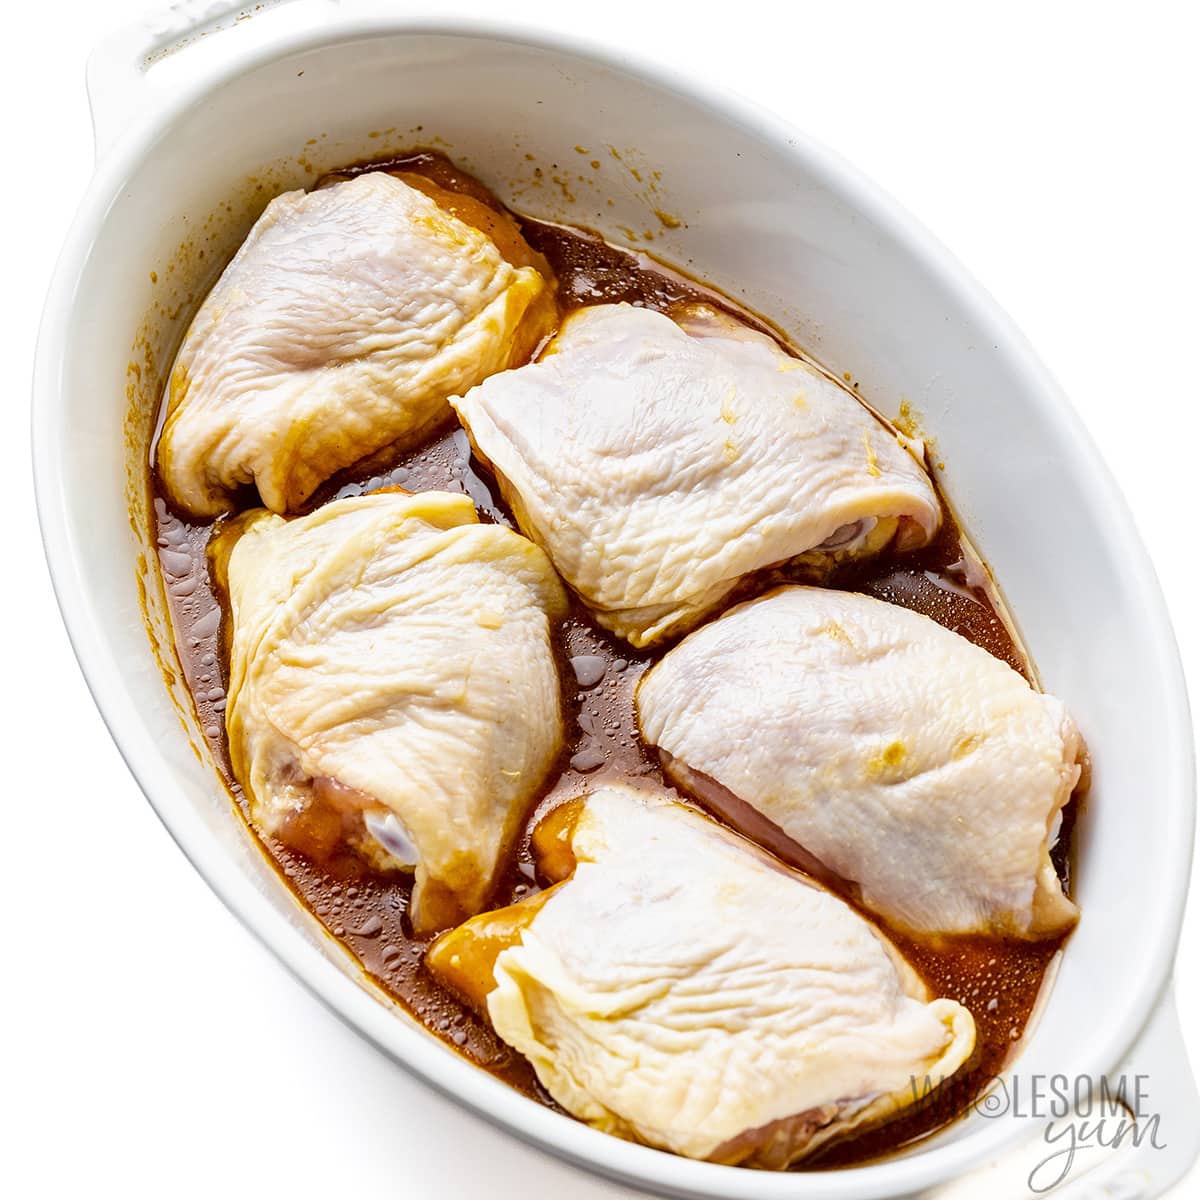 Bone-in chicken thighs in baking dish with marinade.